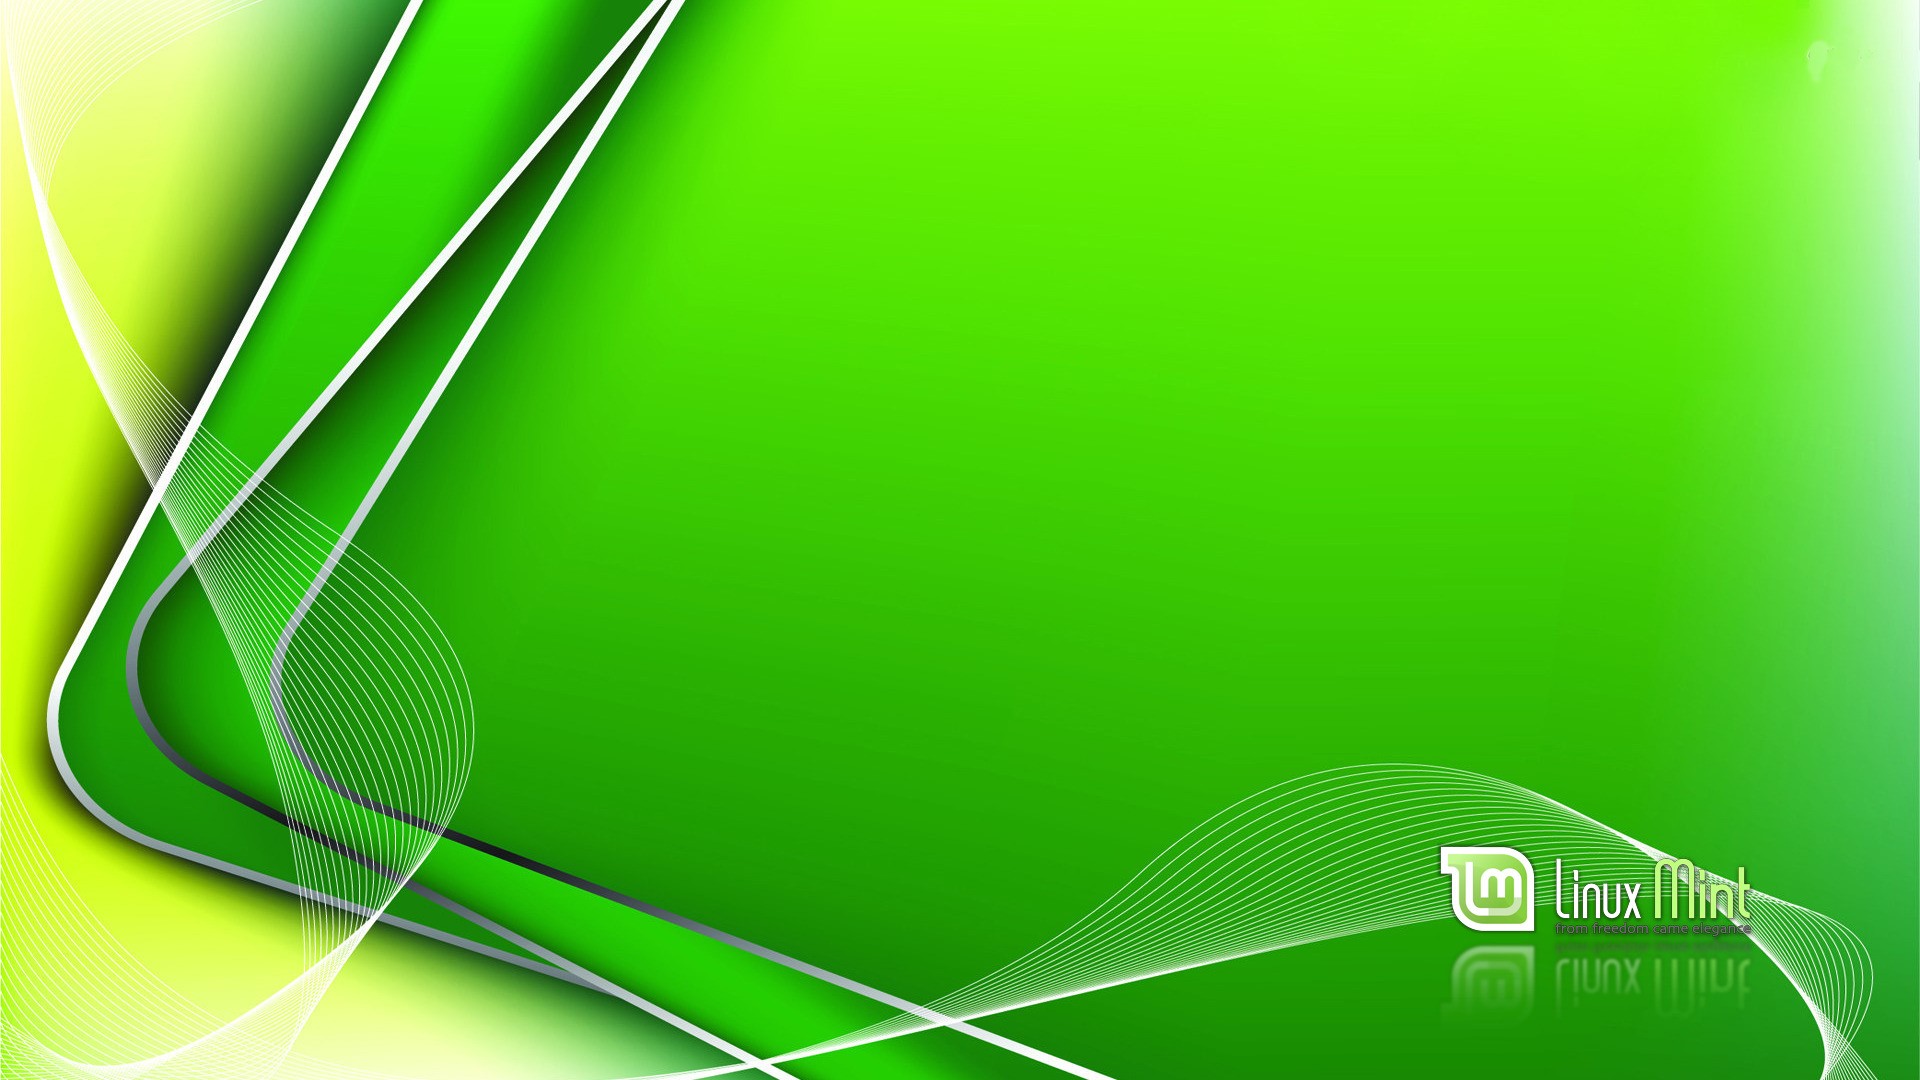 Digital art linux logo linux mint green background